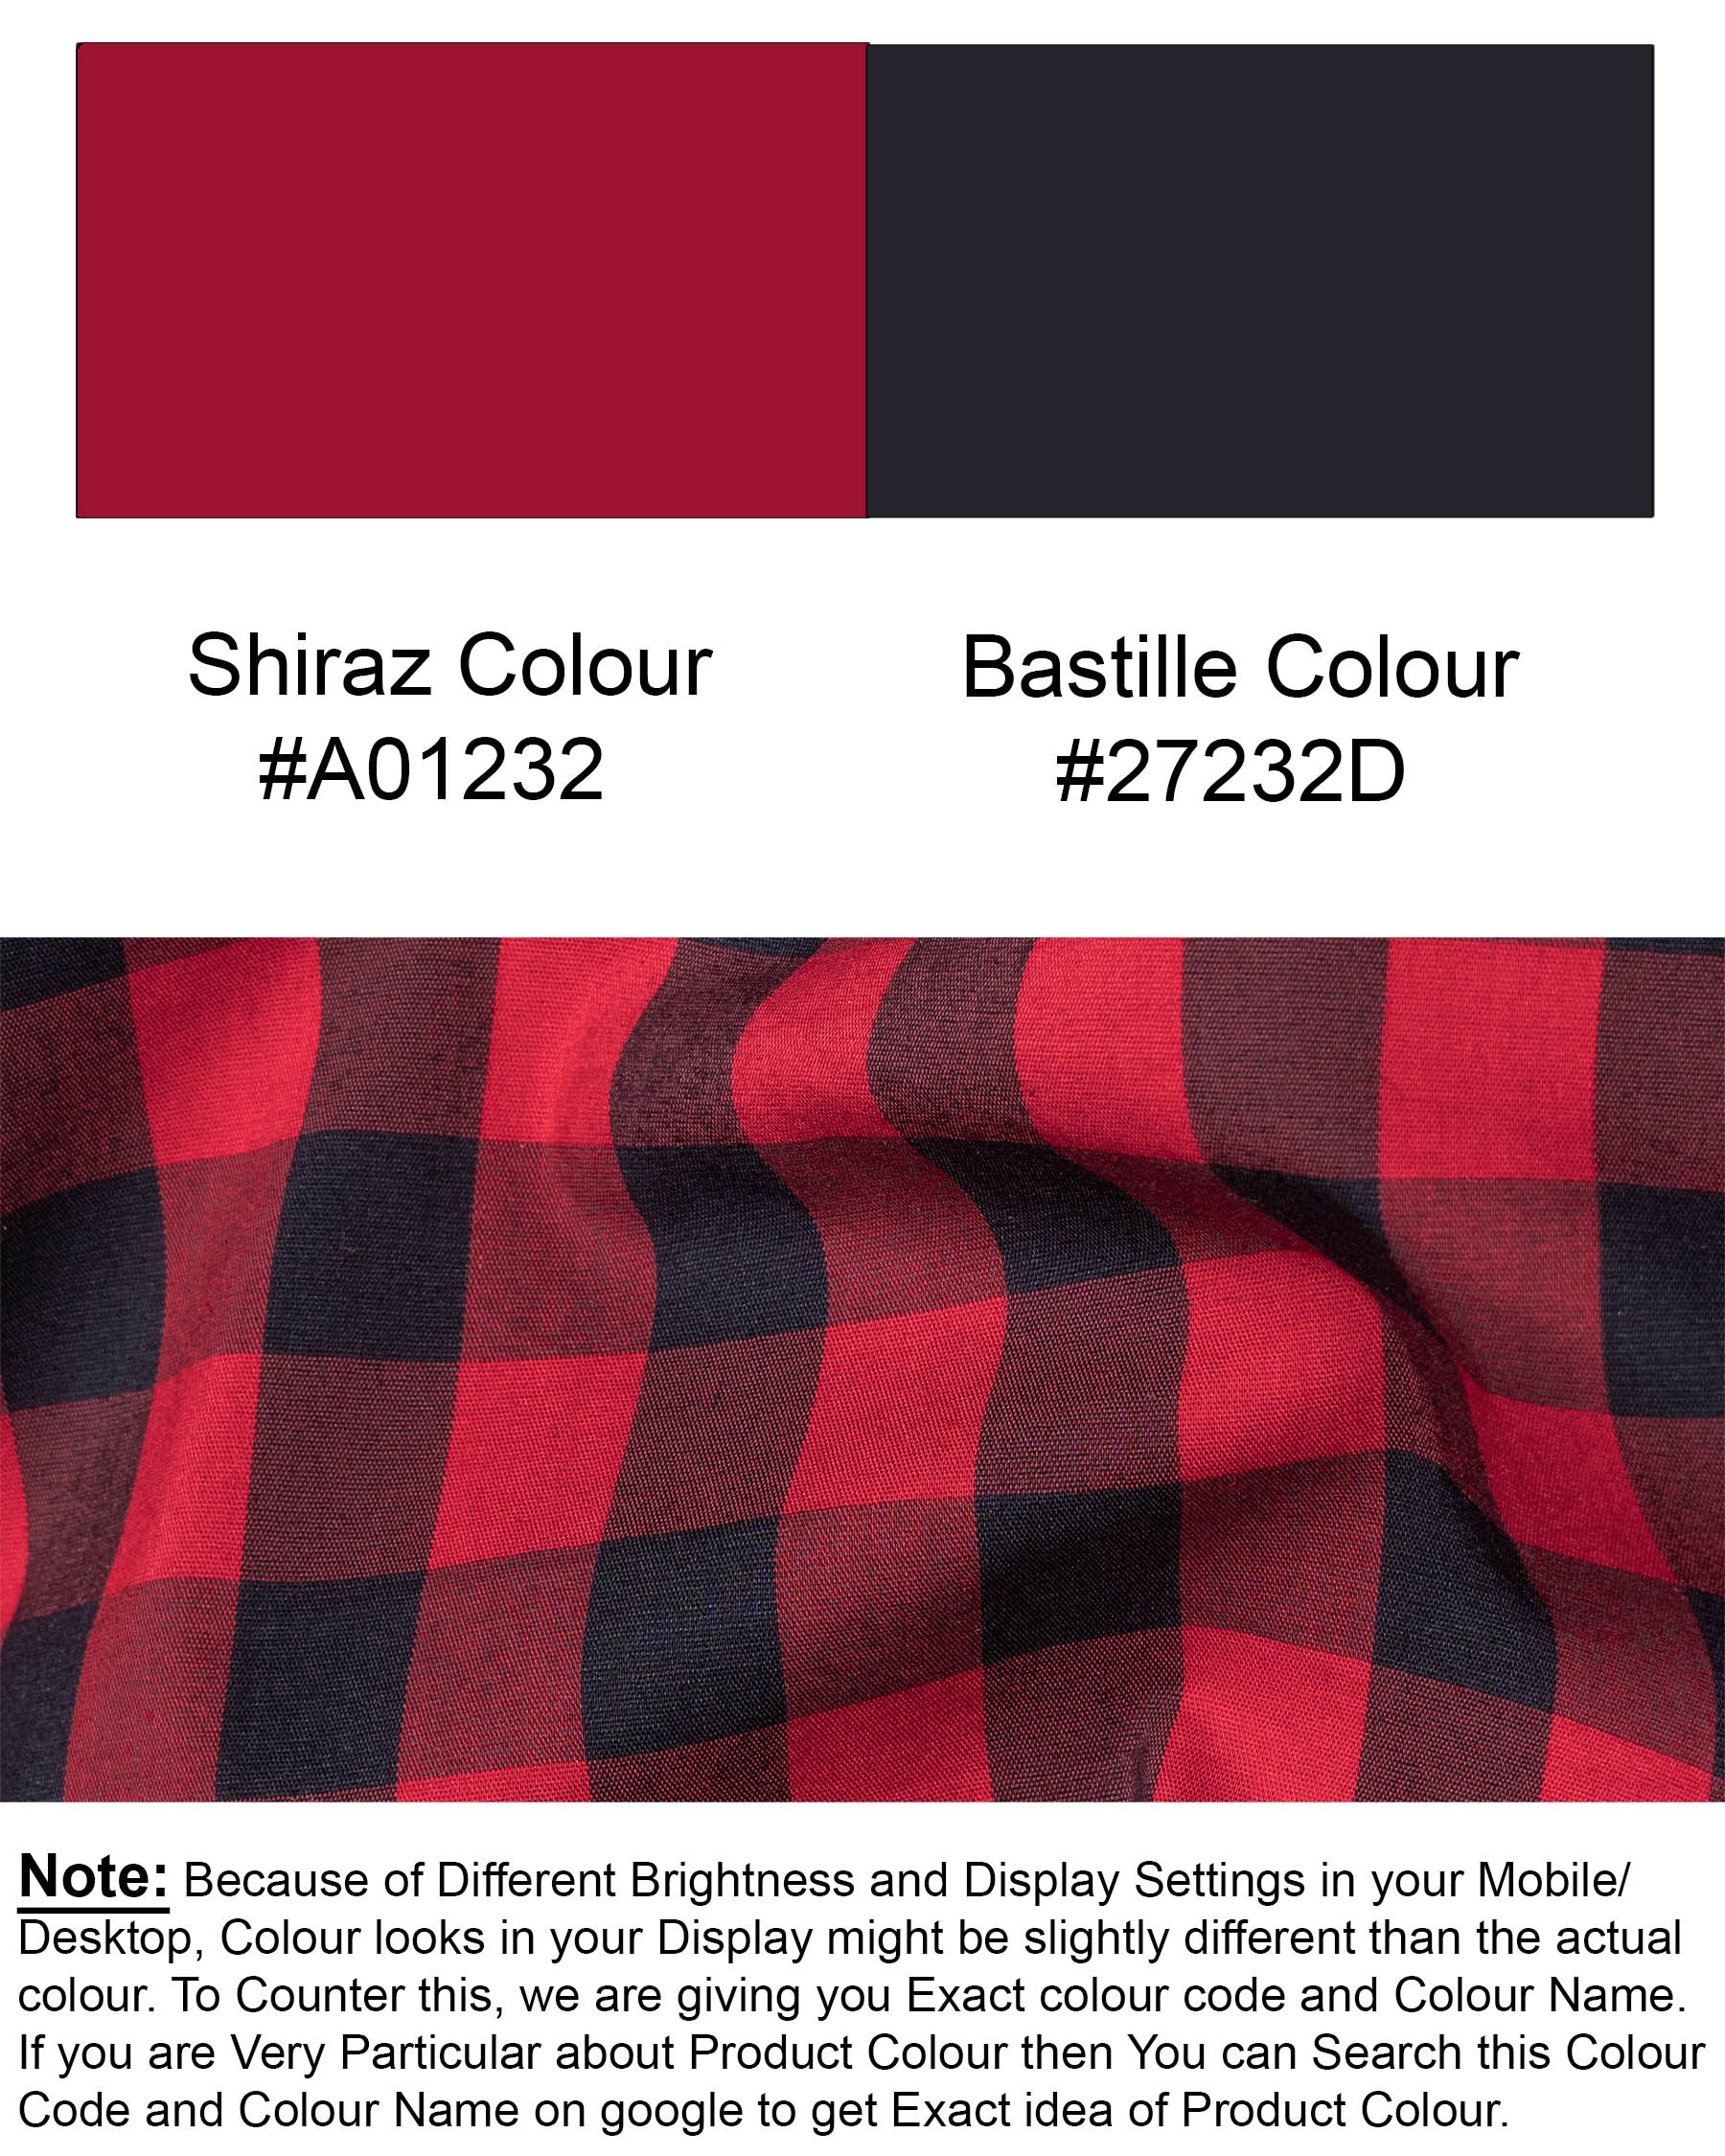 Shiraz Red Checkered Premium Cotton Shirt 6349-BLK-38,6349-BLK-H-38,6349-BLK-39,6349-BLK-H-39,6349-BLK-40,6349-BLK-H-40,6349-BLK-42,6349-BLK-H-42,6349-BLK-44,6349-BLK-H-44,6349-BLK-46,6349-BLK-H-46,6349-BLK-48,6349-BLK-H-48,6349-BLK-50,6349-BLK-H-50,6349-BLK-52,6349-BLK-H-52